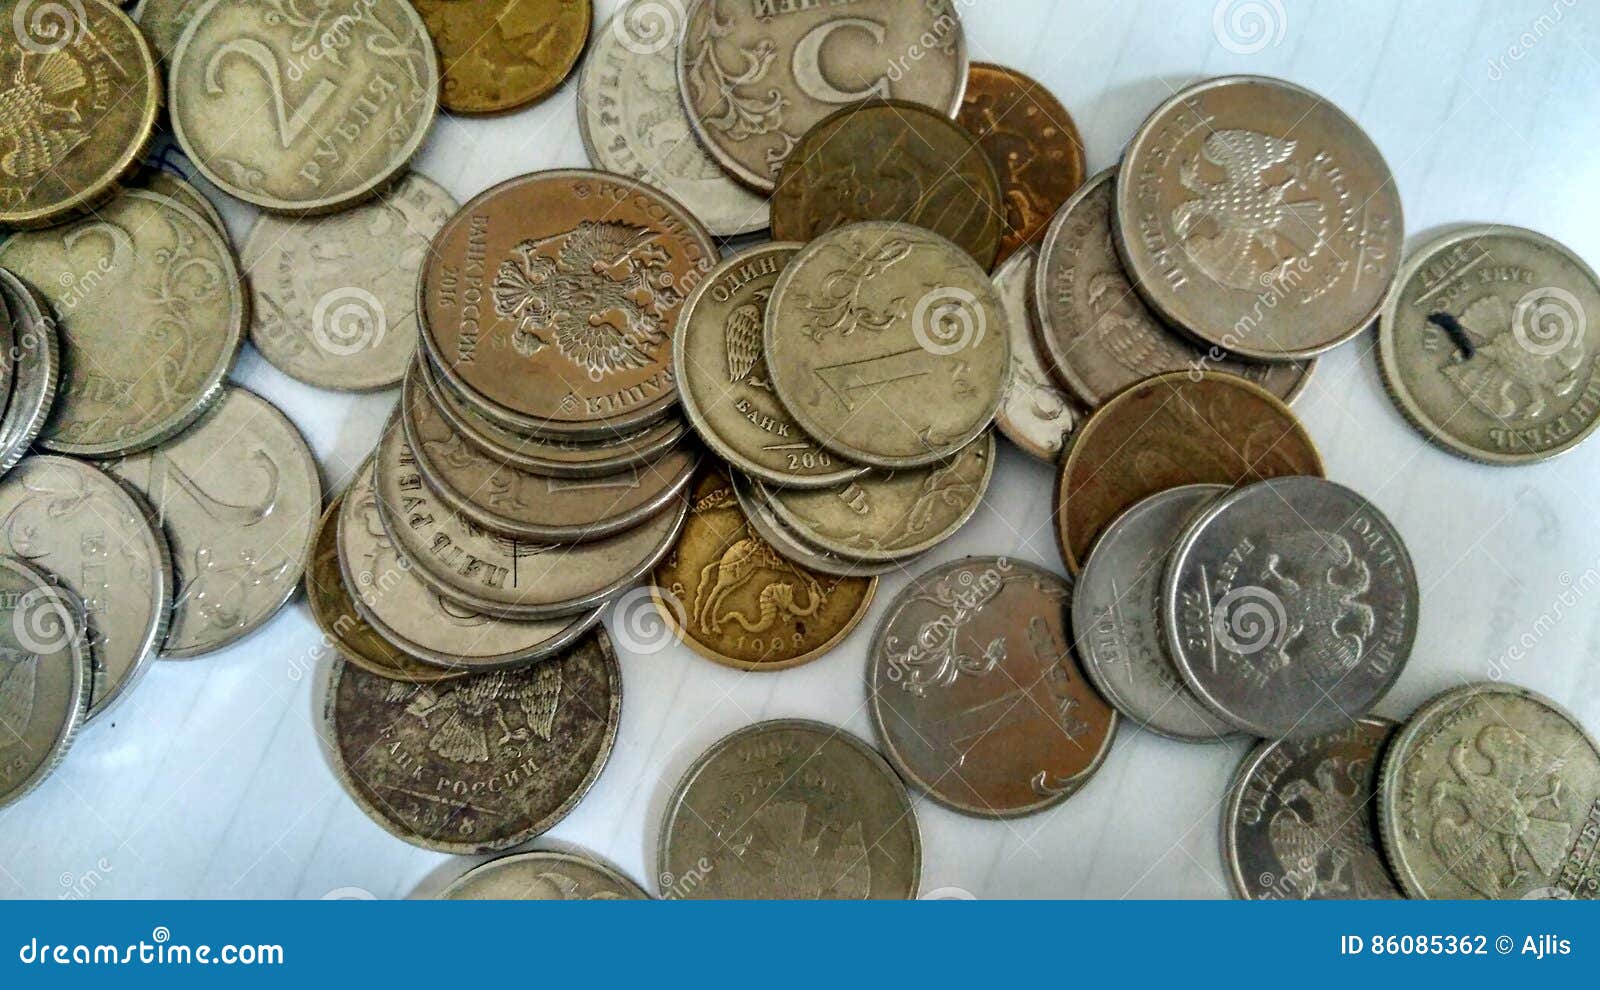 Originell geldgeschenke verpacken münzen VIDEO: Geldgeschenkideen